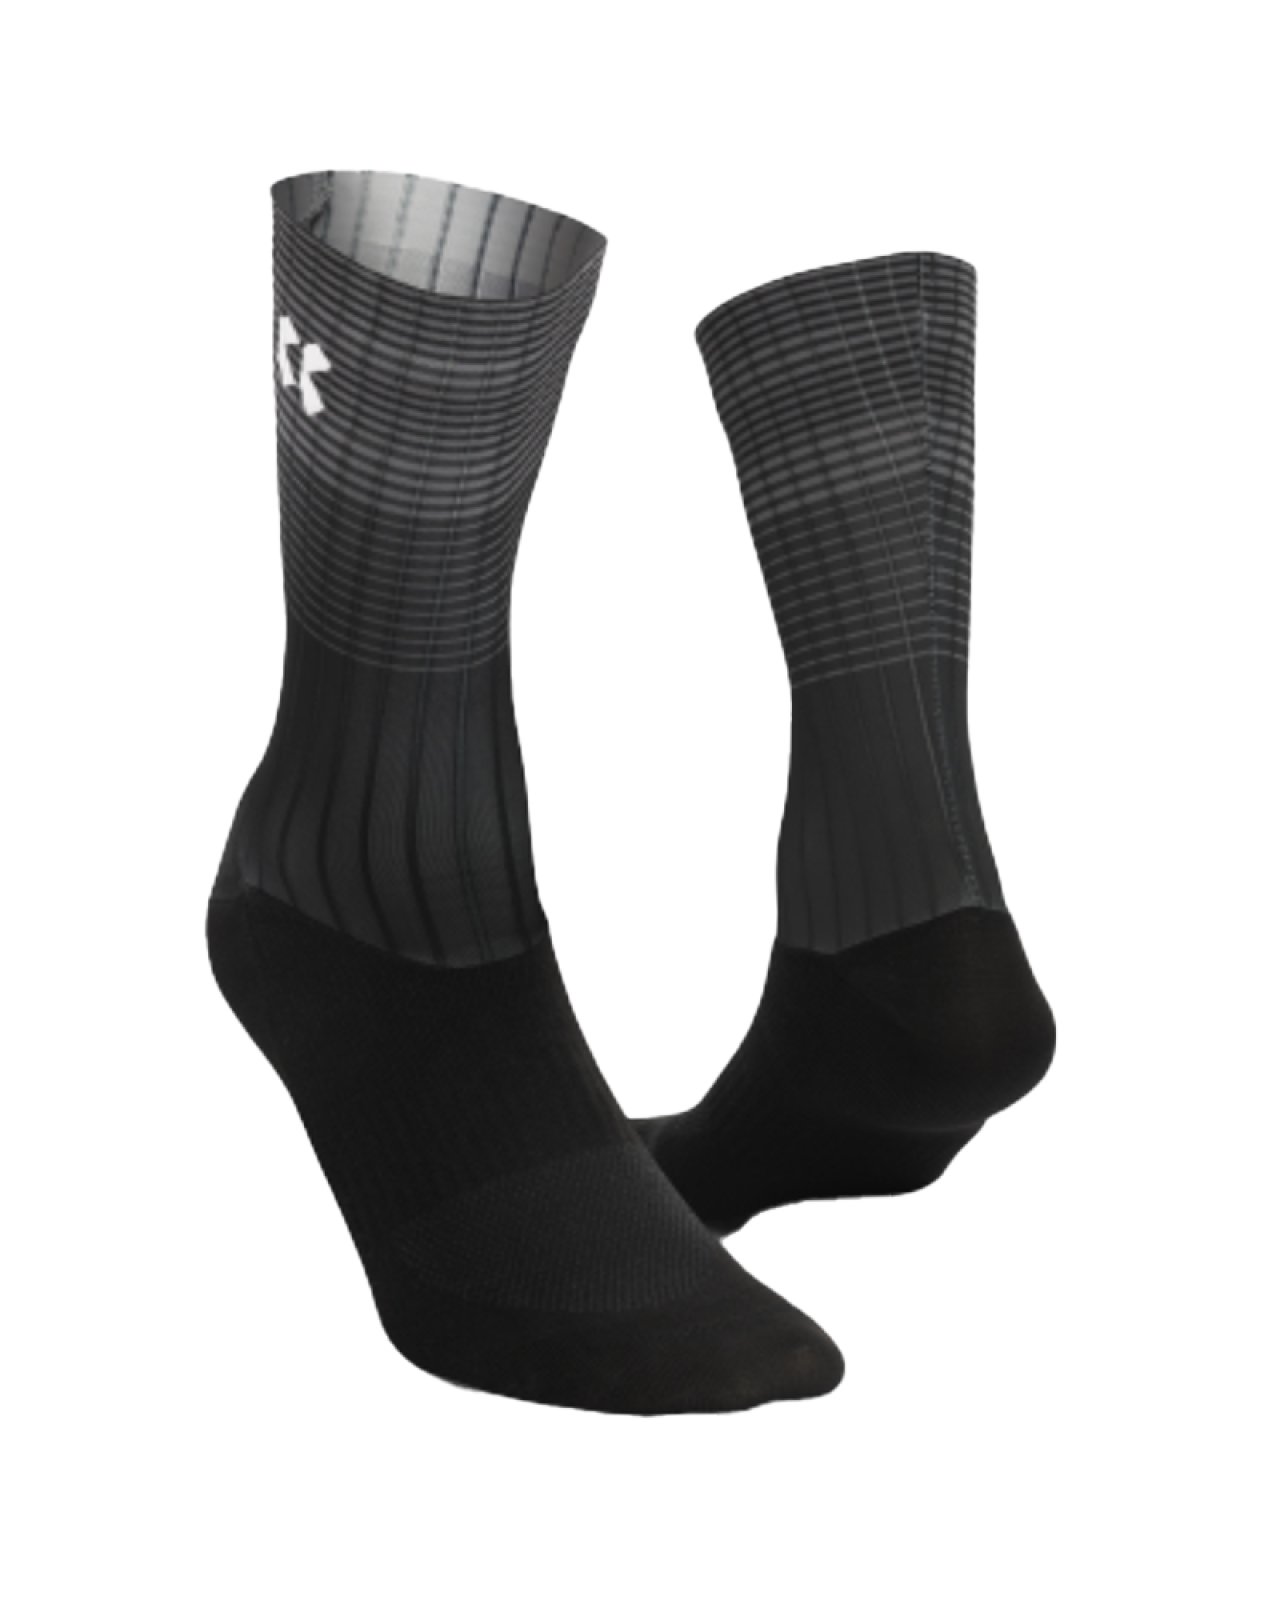 AERO Socks SONIC 18 | SPEED | KALAS Sportswear